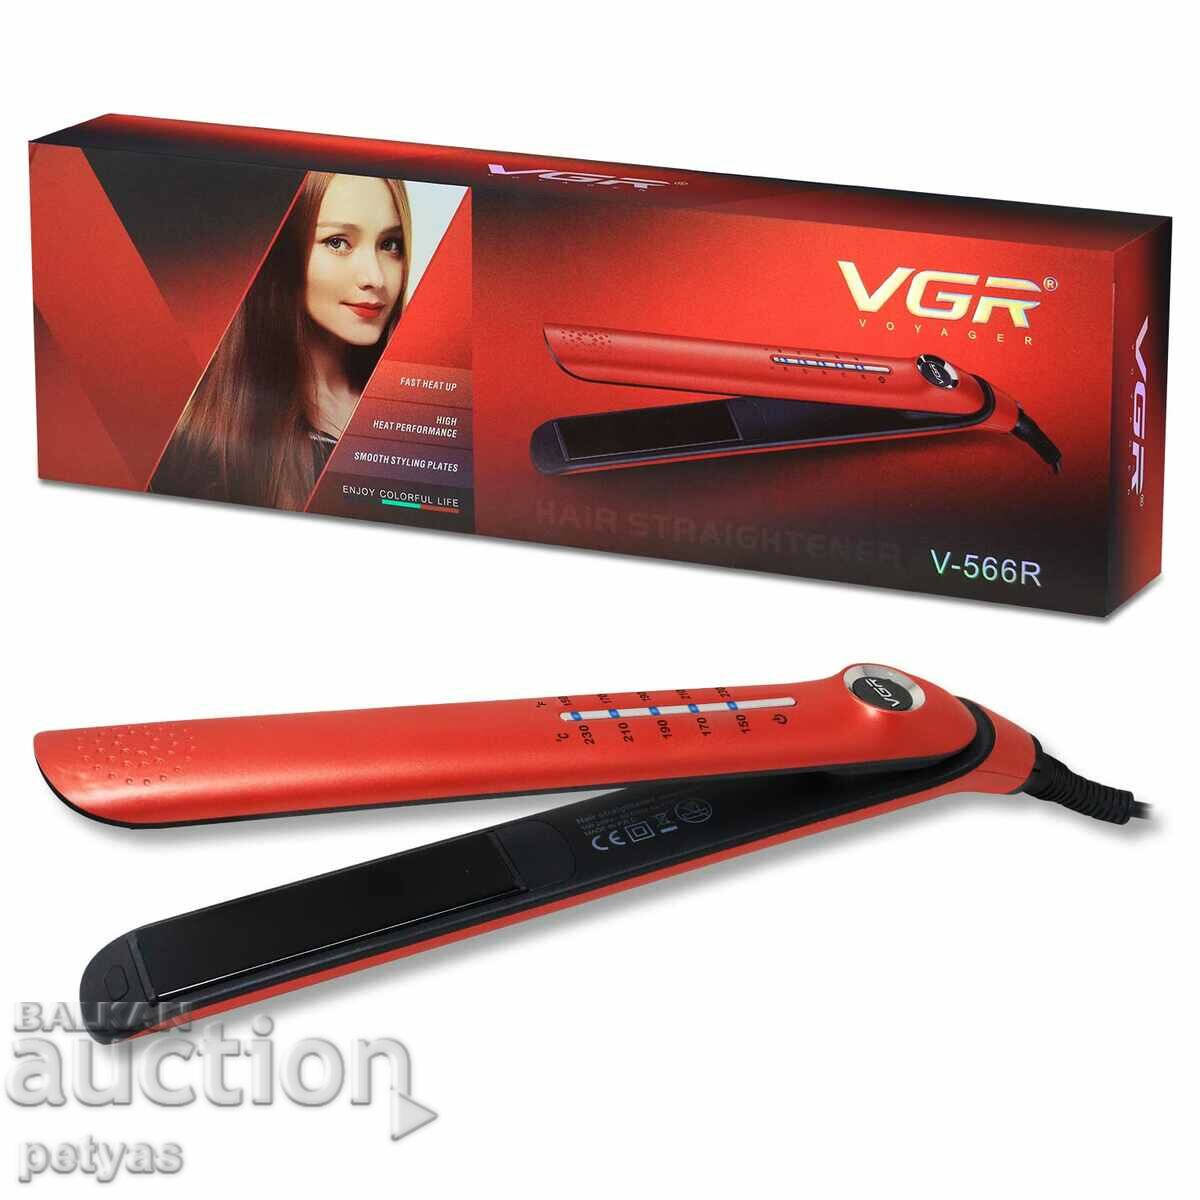 Hair straightener with ceramic coating VGR V-566R